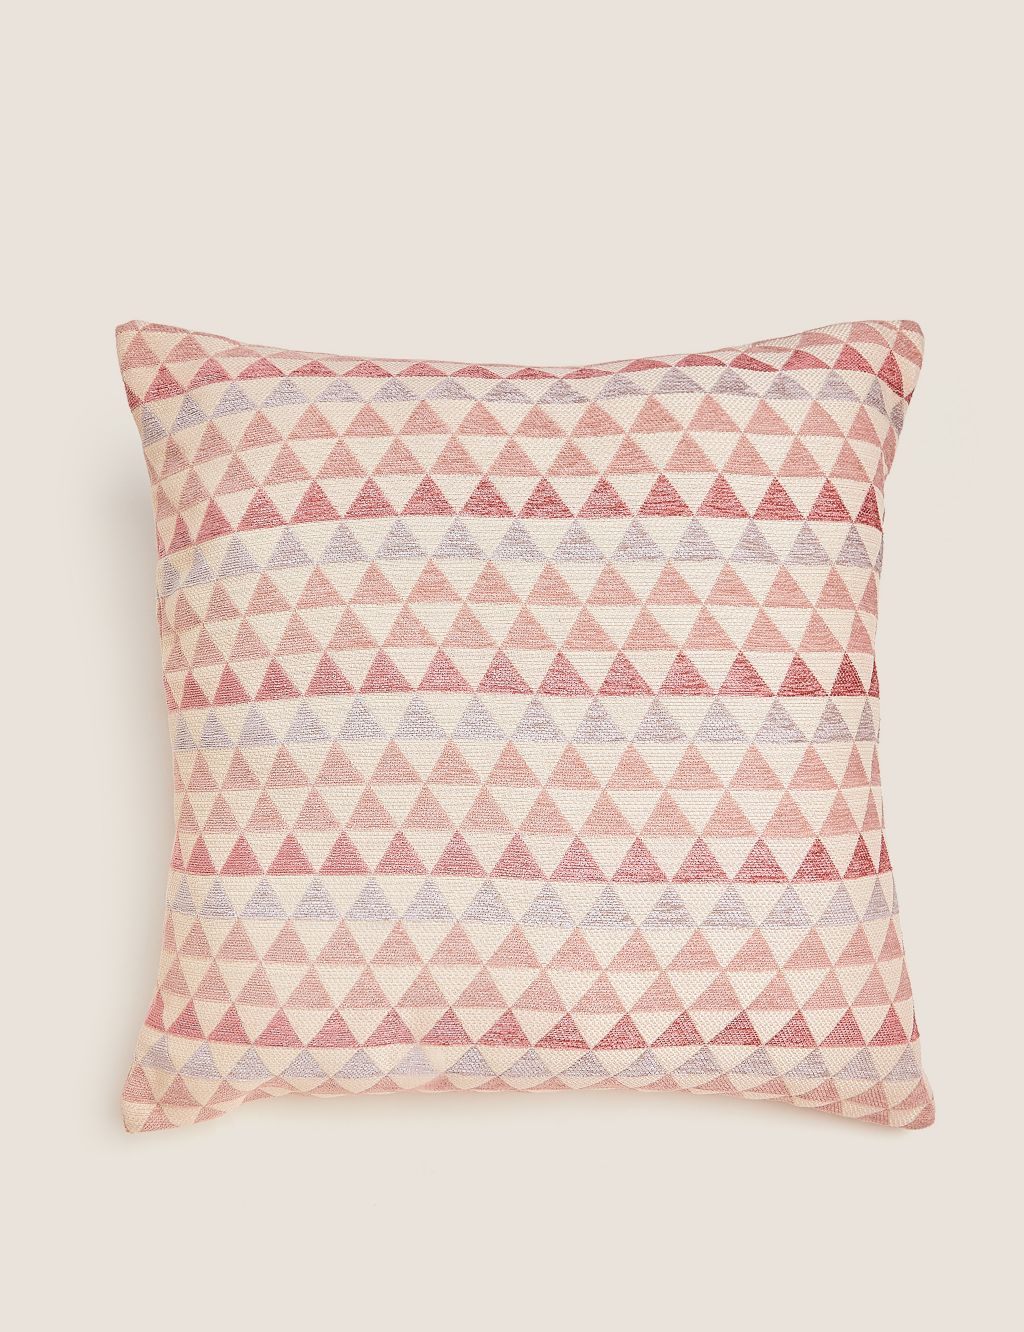 Chenille Geometric Cushion image 1